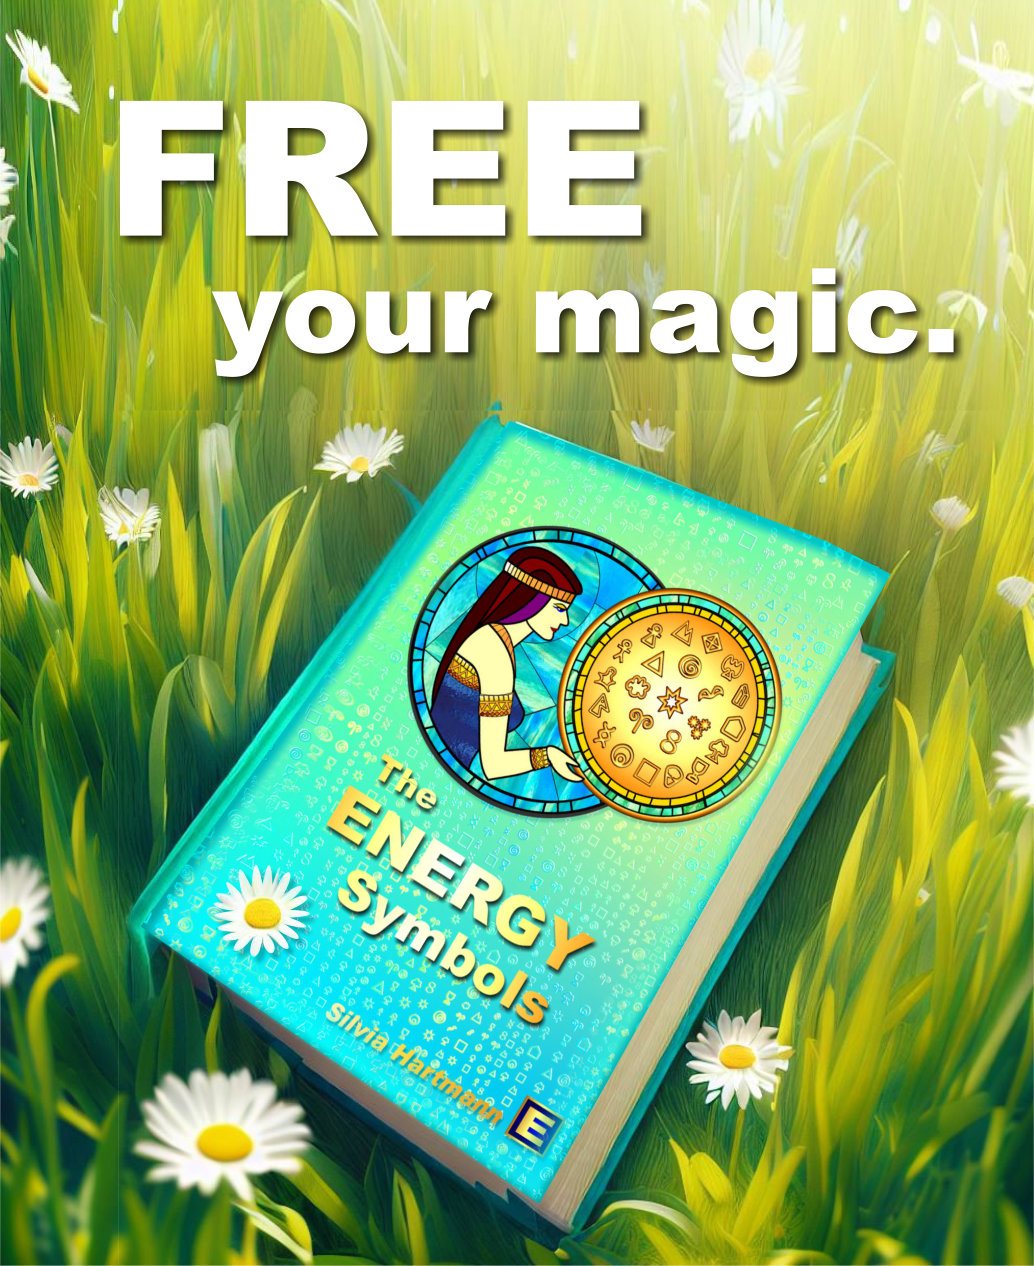 Free Your Magic!